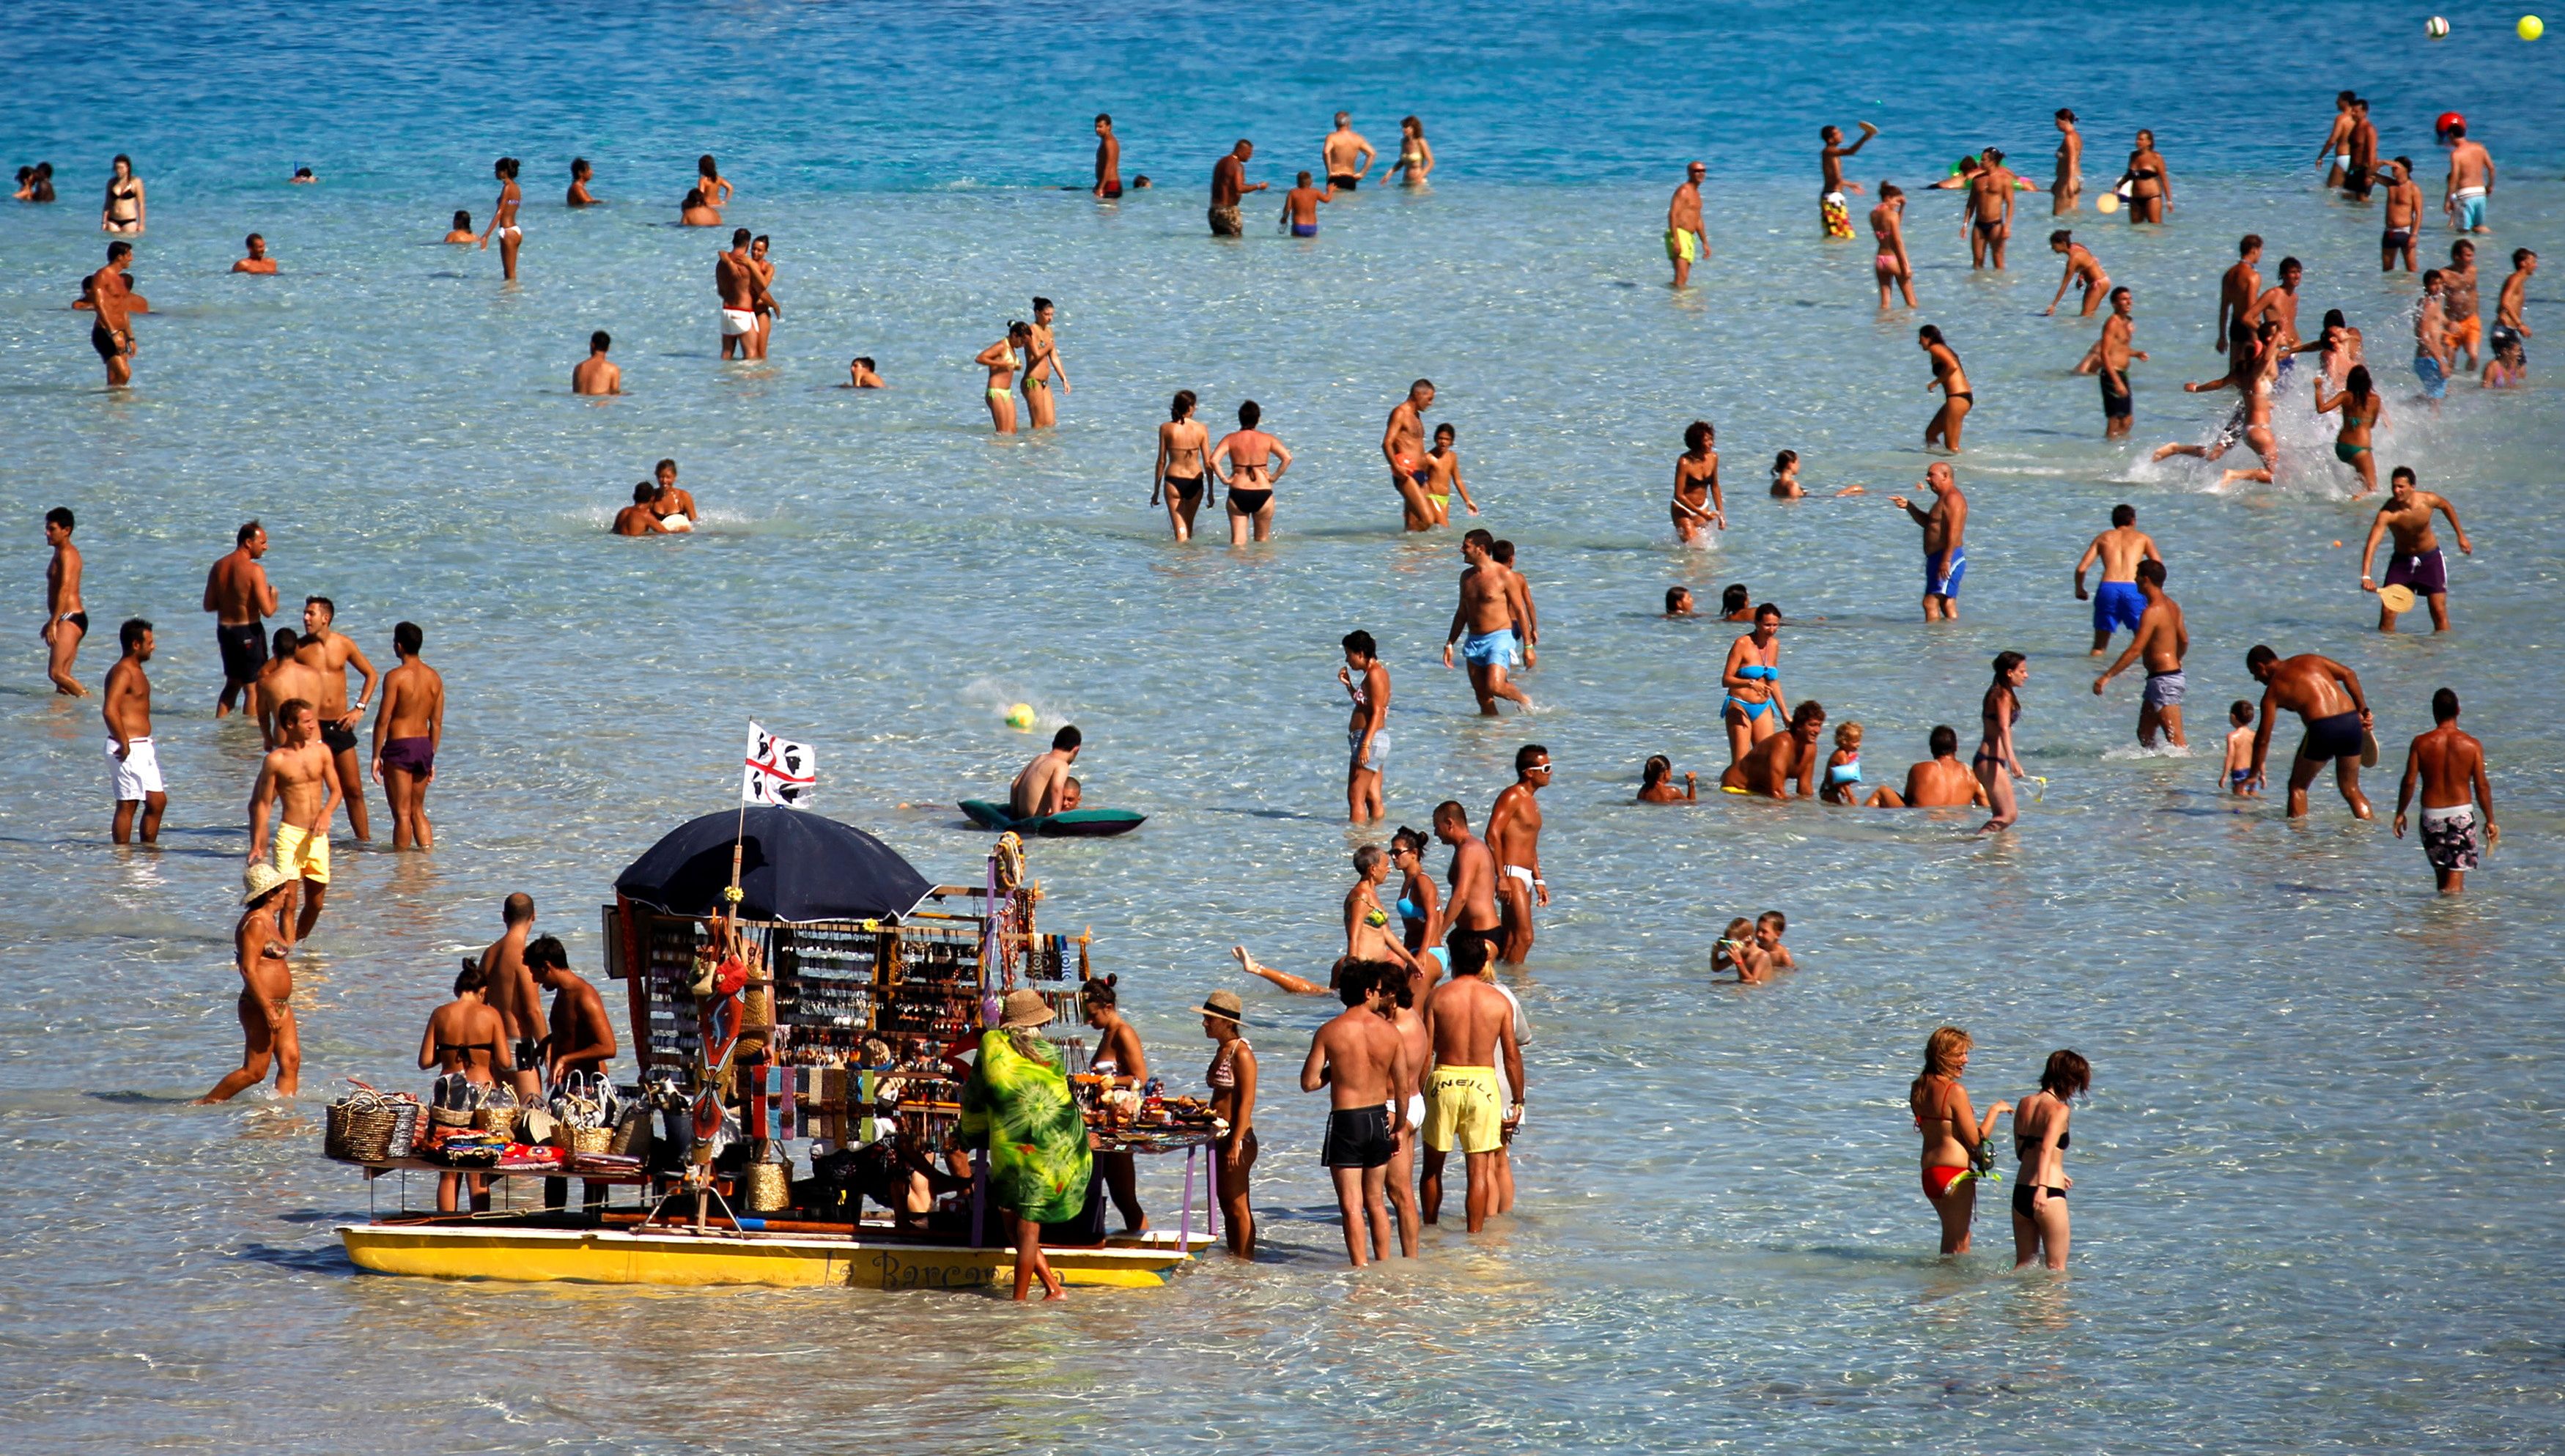 People sunbathe on the beach in the Italian town of Stintino